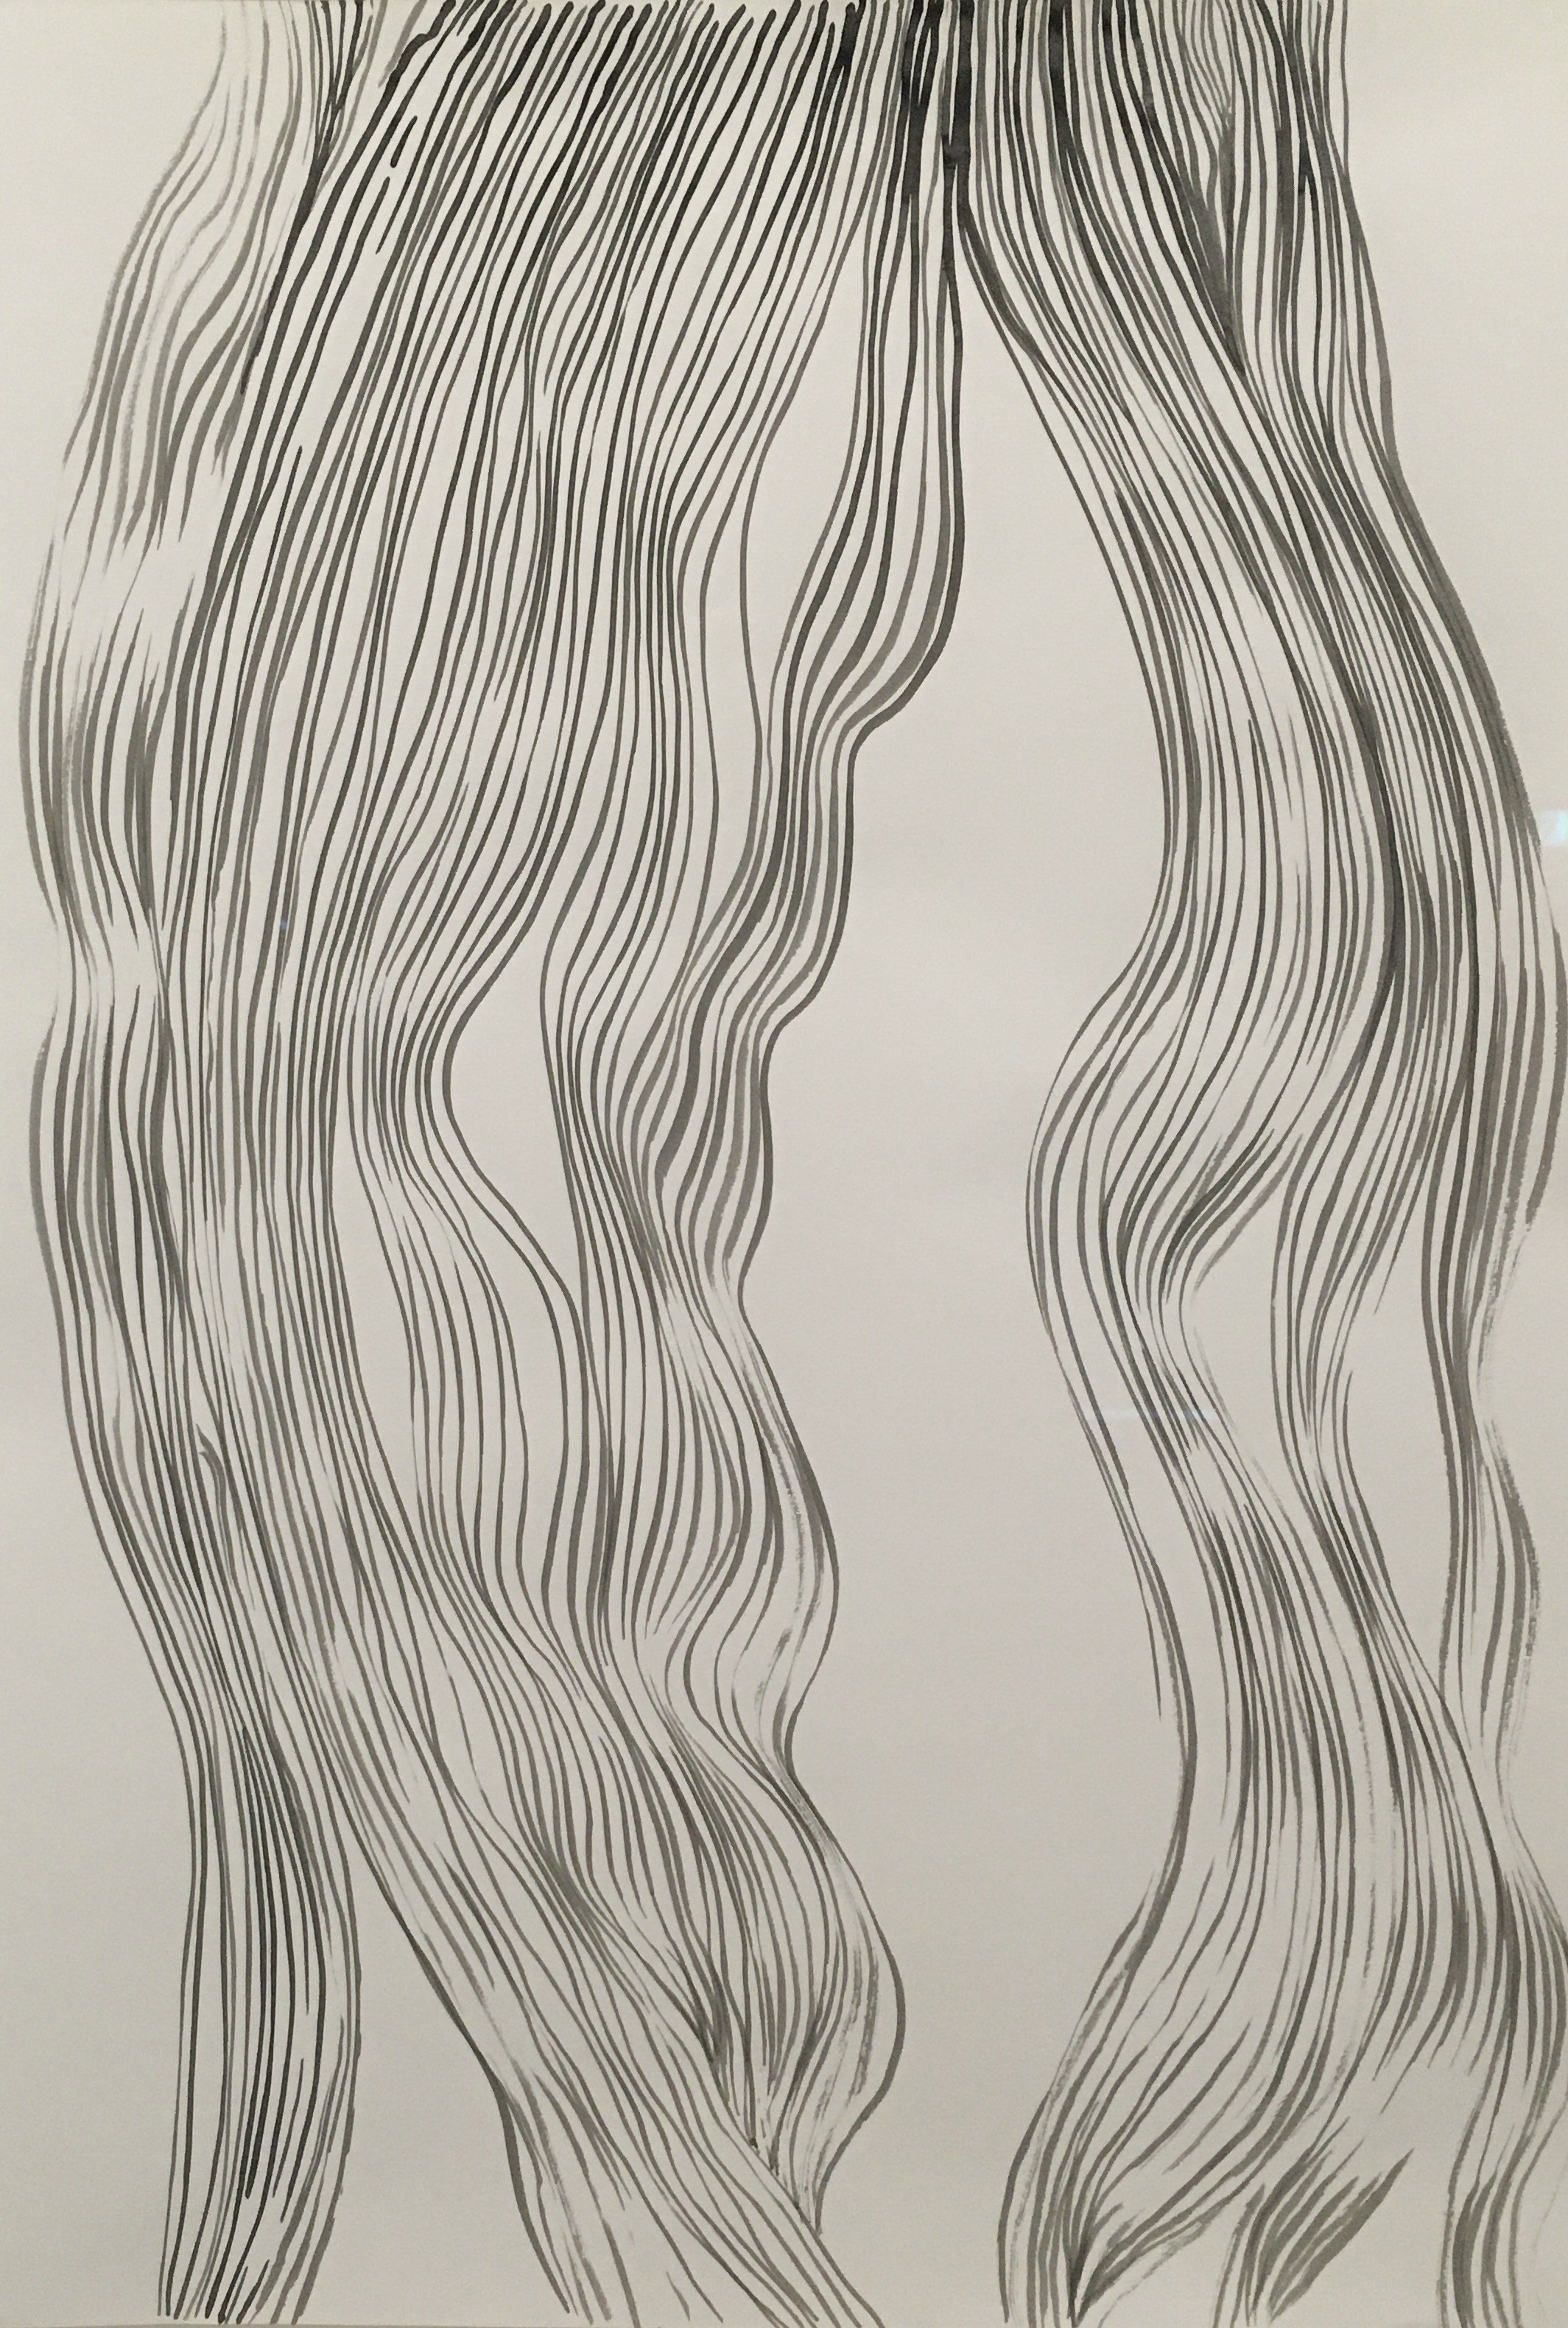 Evelina Cajacob: Ohne Titel, 2017. Tusche auf Papier, 59.4 x 42 cm